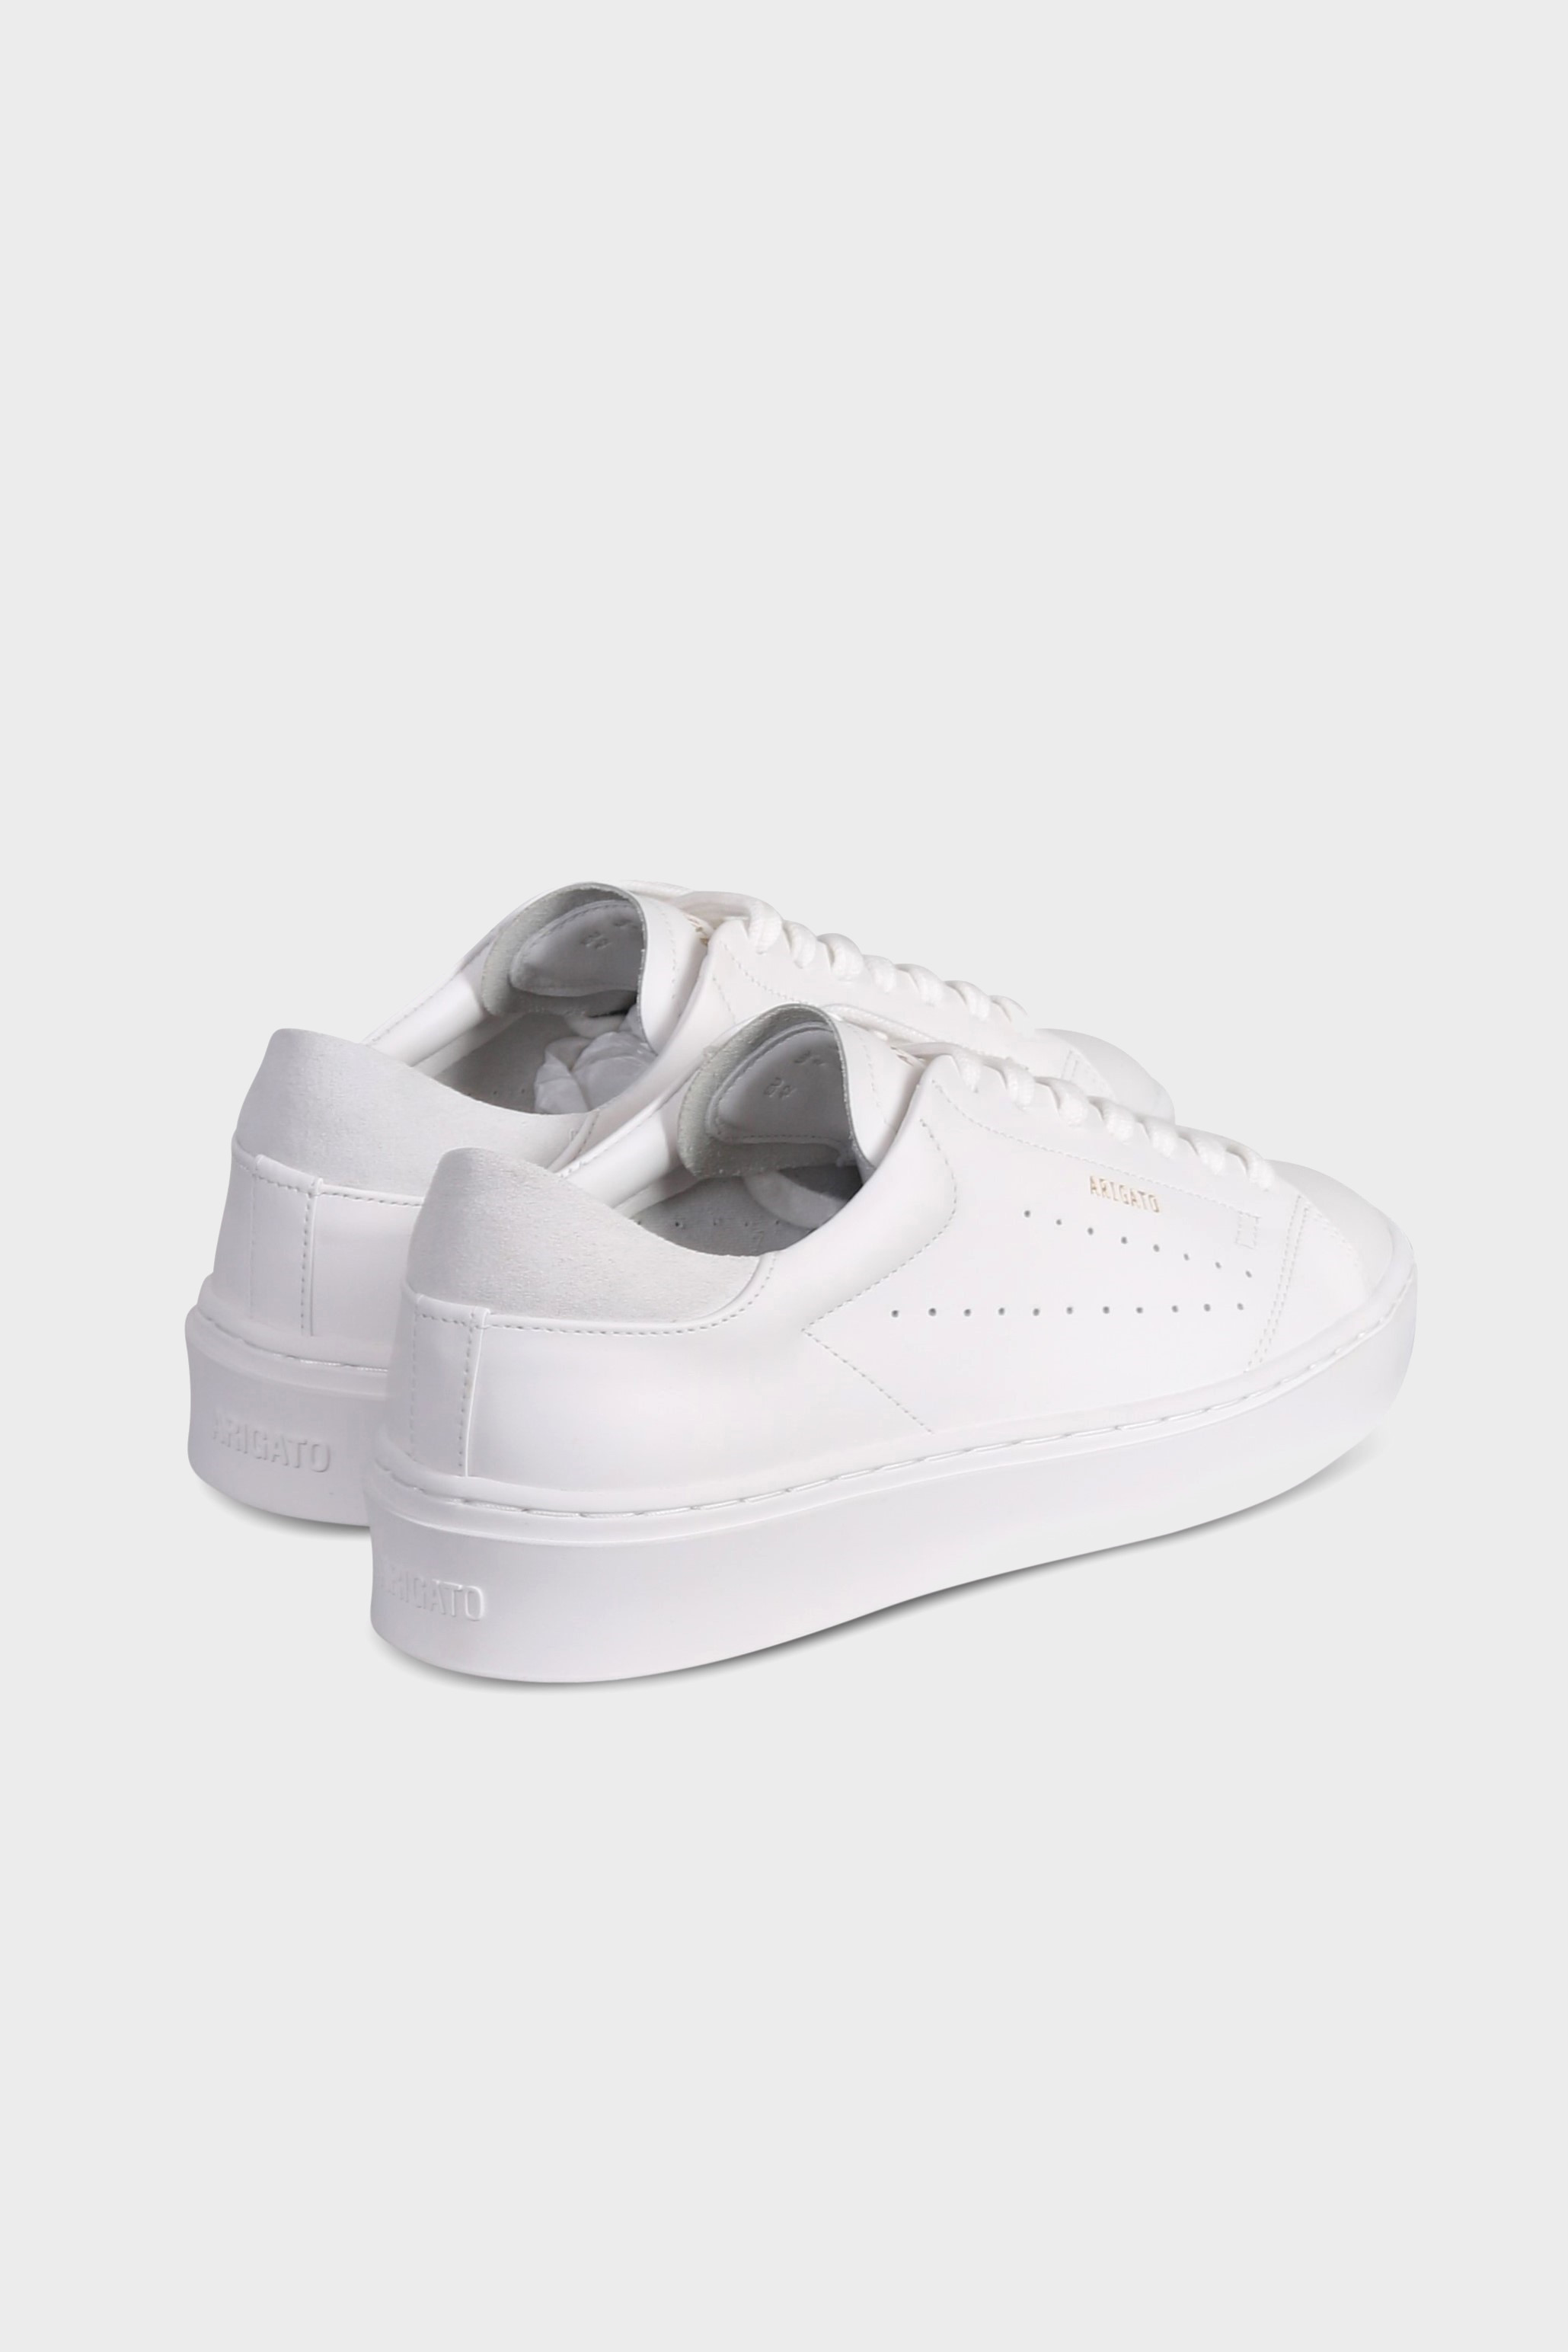 AXEL ARIGATO Court Sneaker in White/Light Grey 42